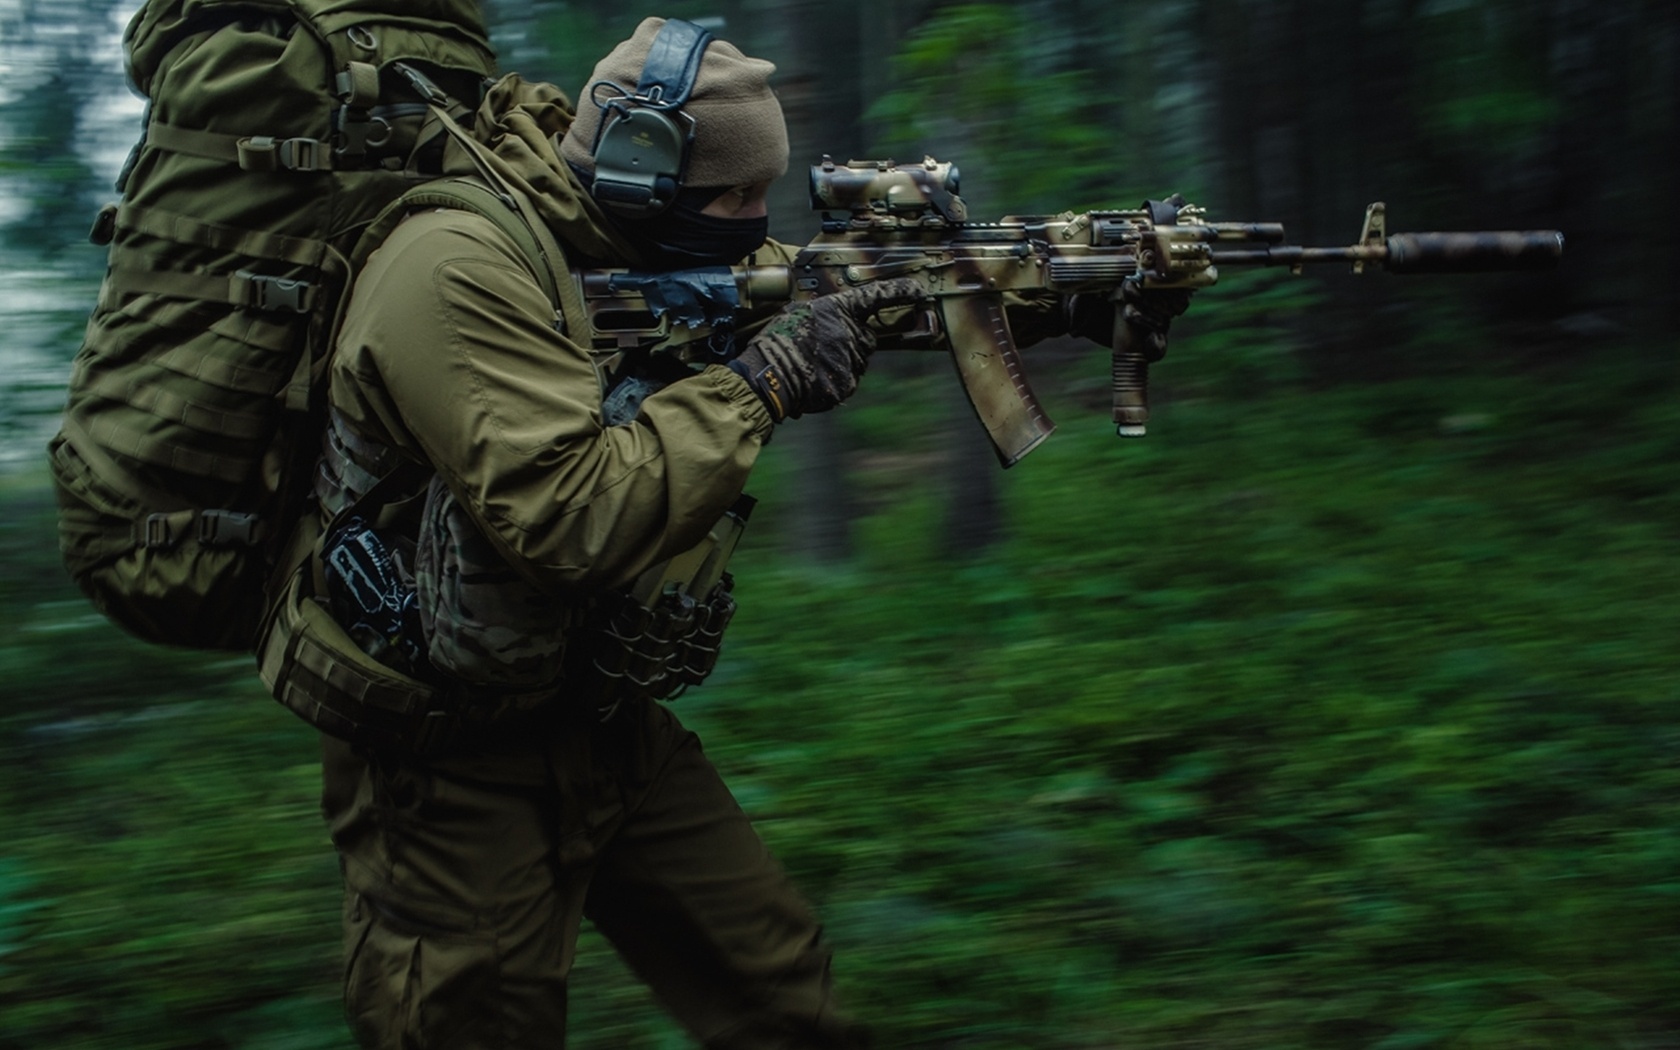 Kalashnikov Assault Rifle: the Evolution of a Masterpiece